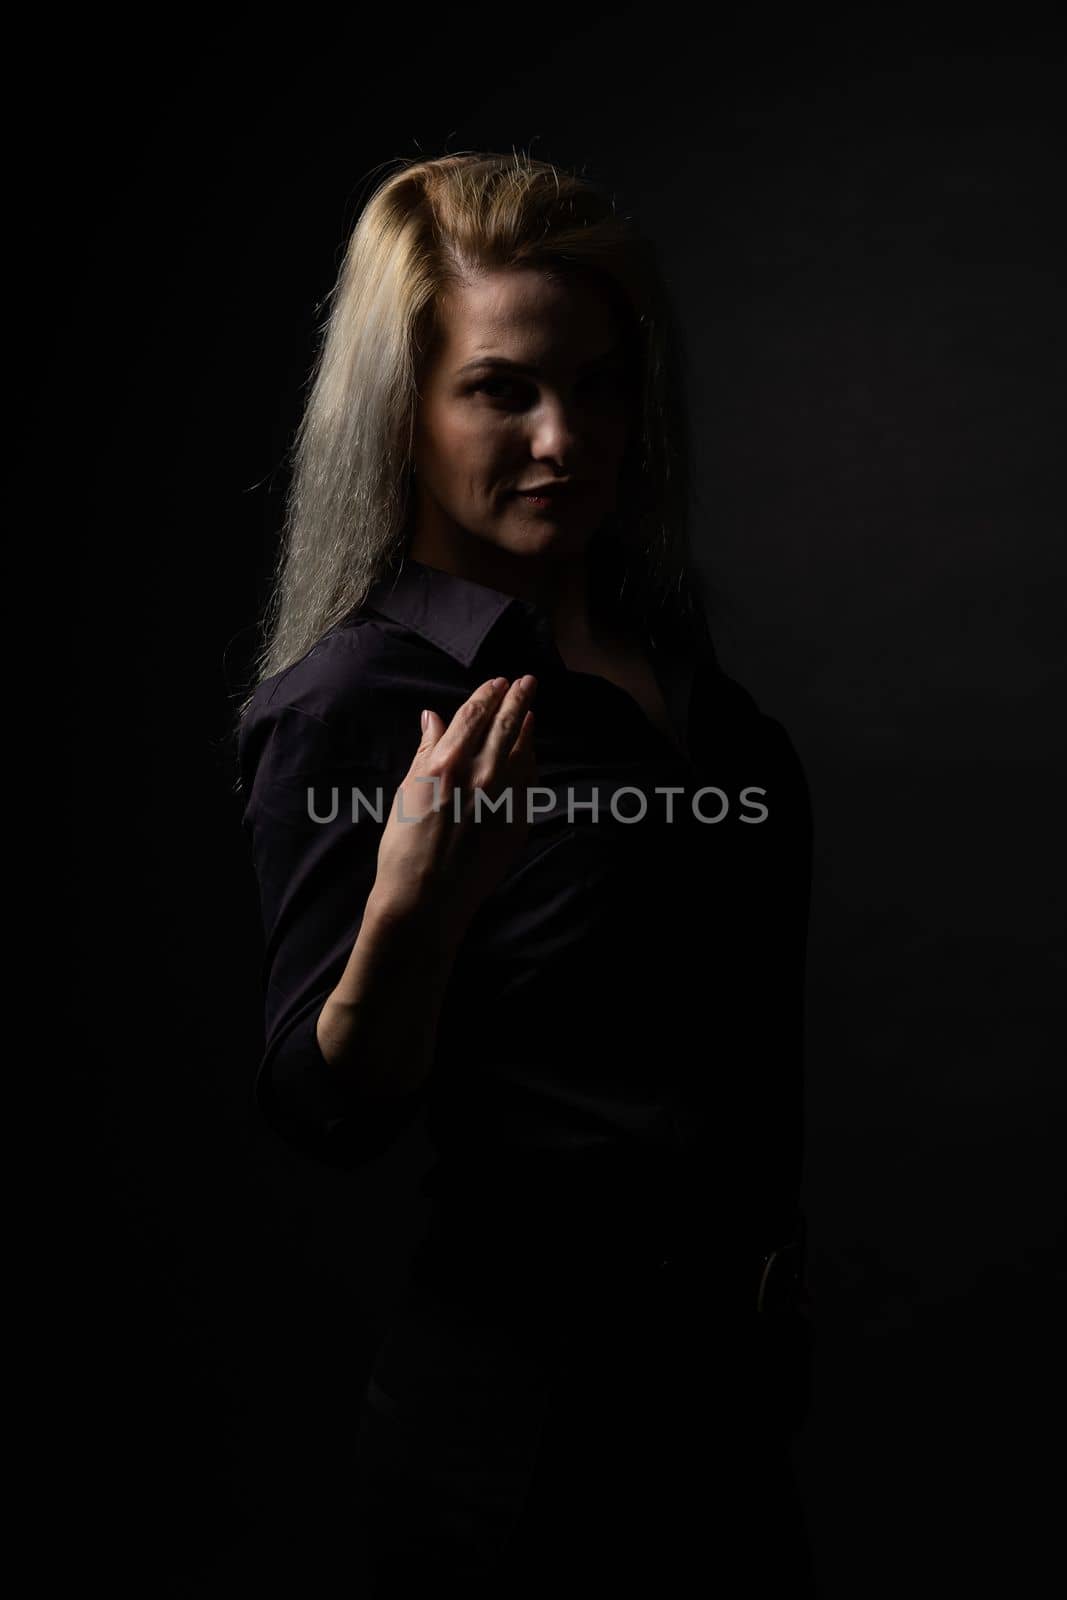 beauty woman on dark background by Andelov13